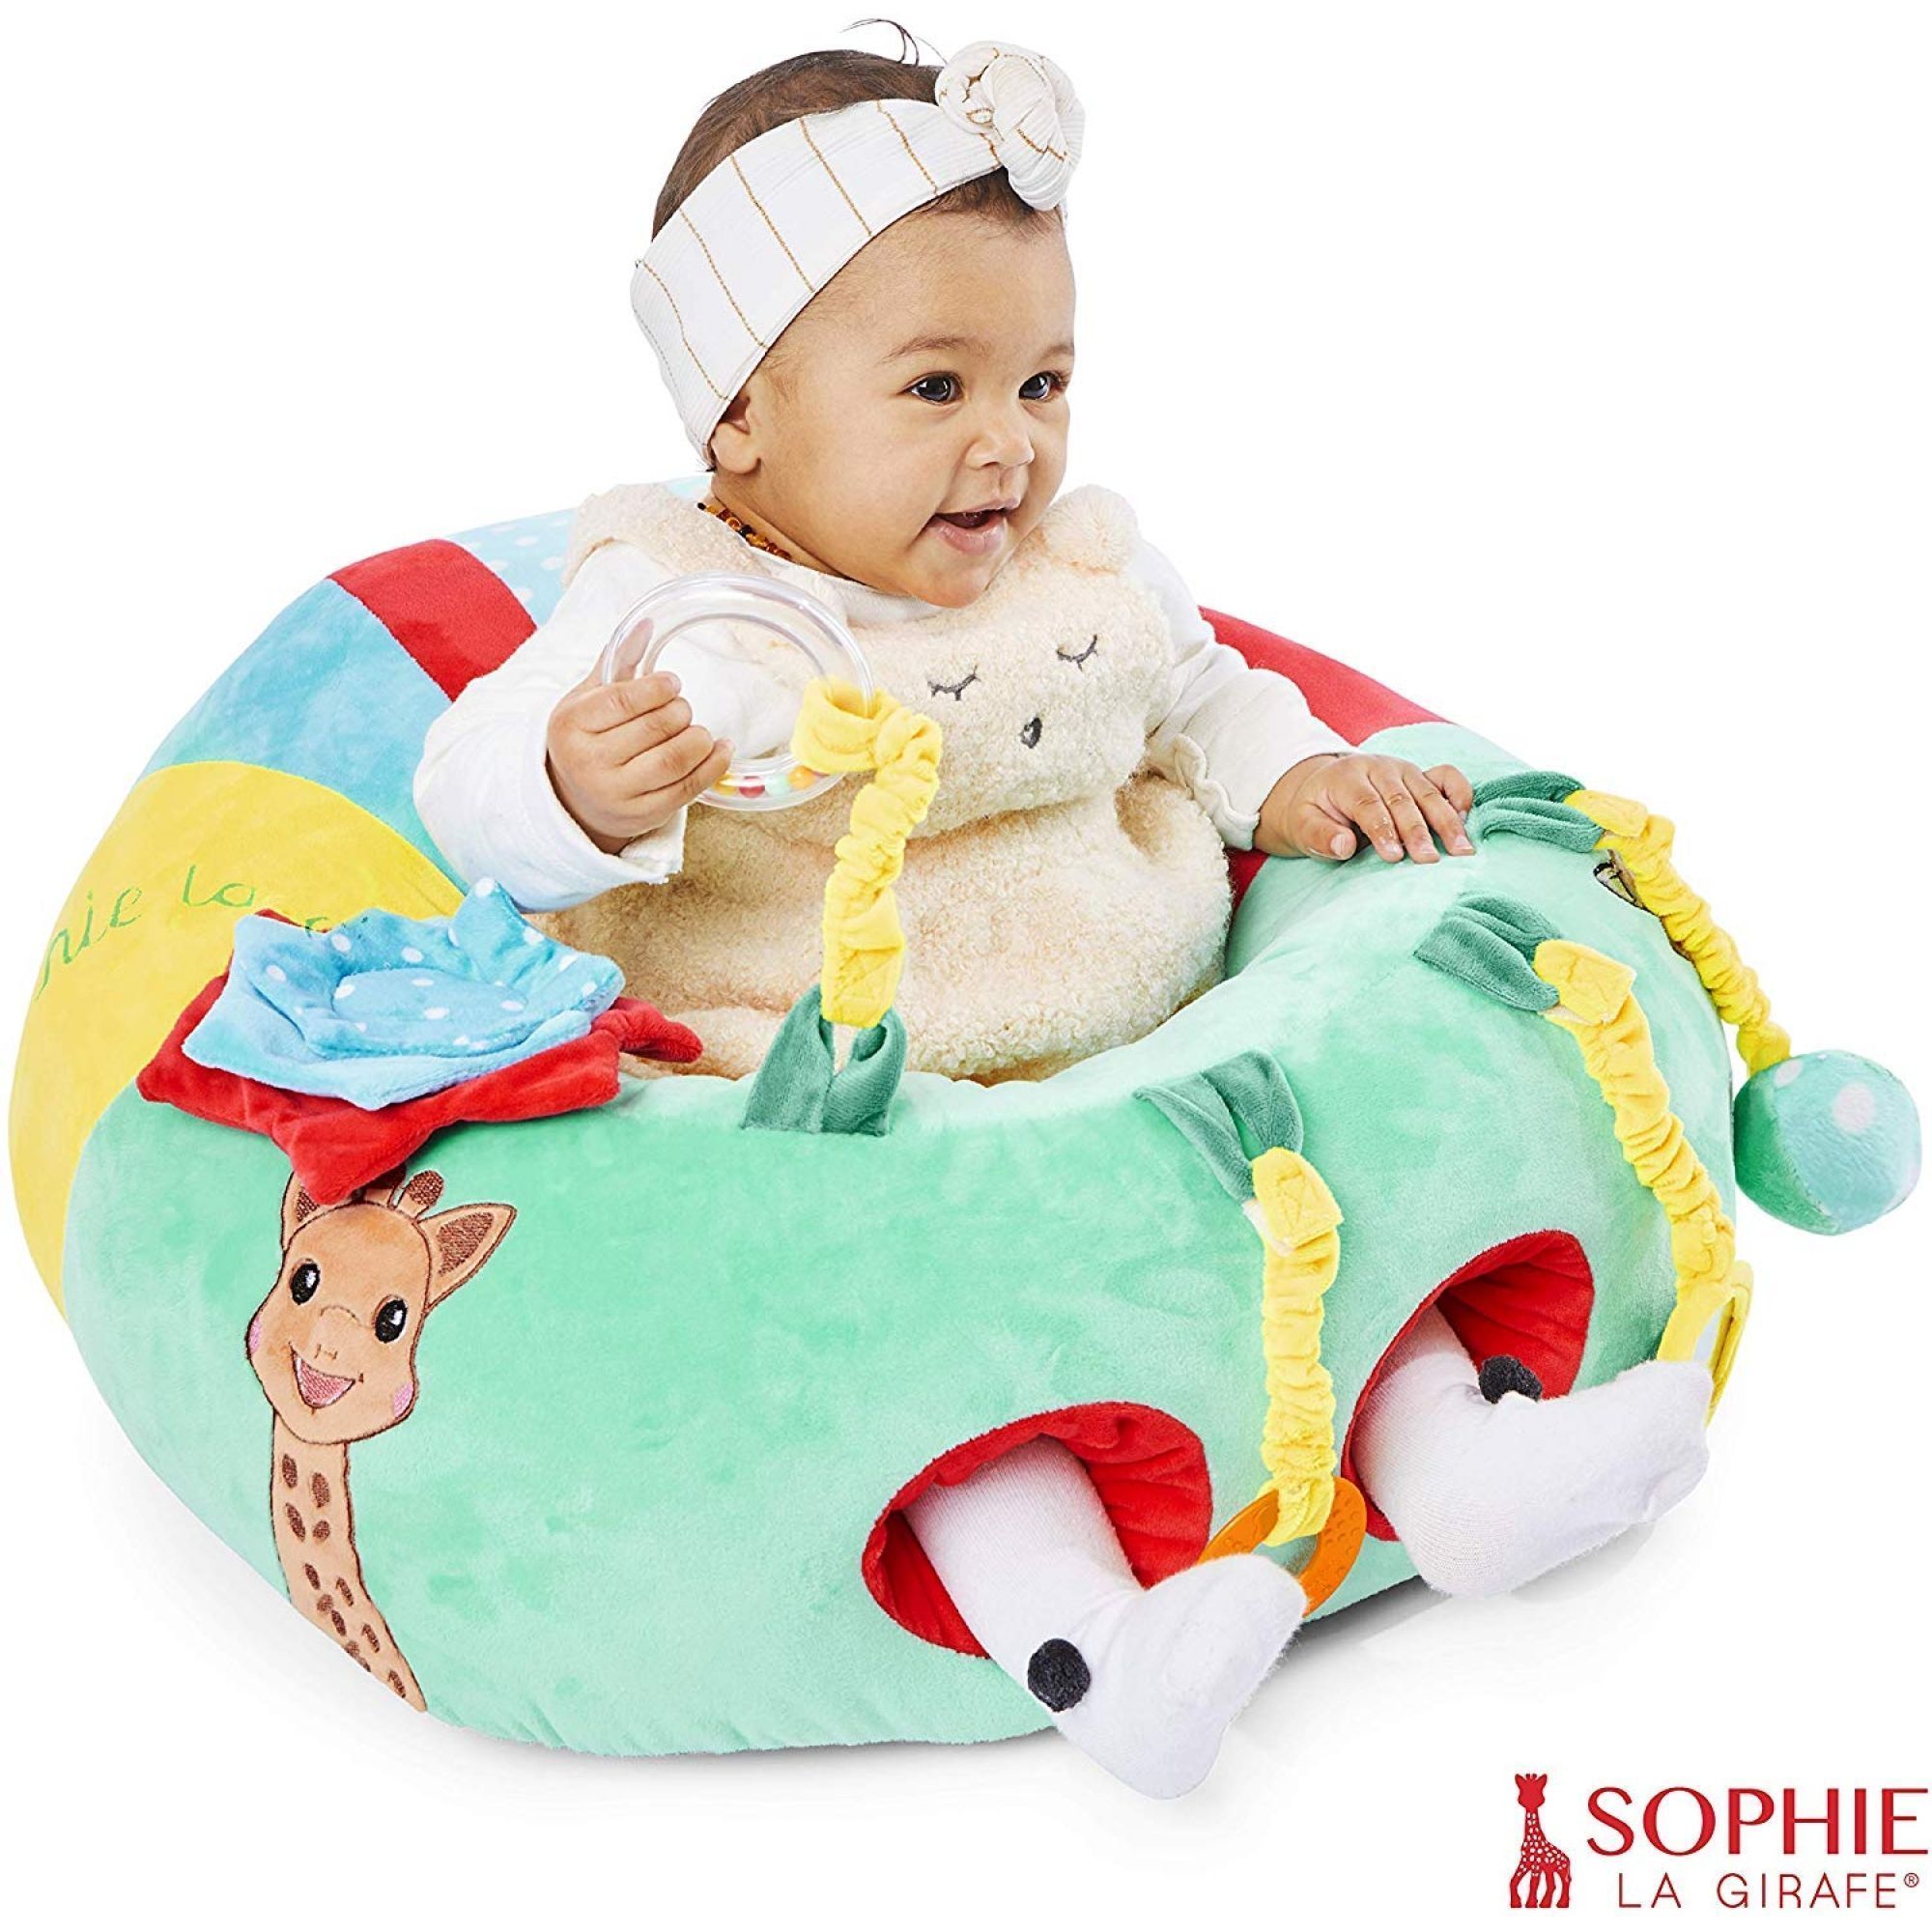 Siège d'éveil Baby seat et play Sophie la girafe